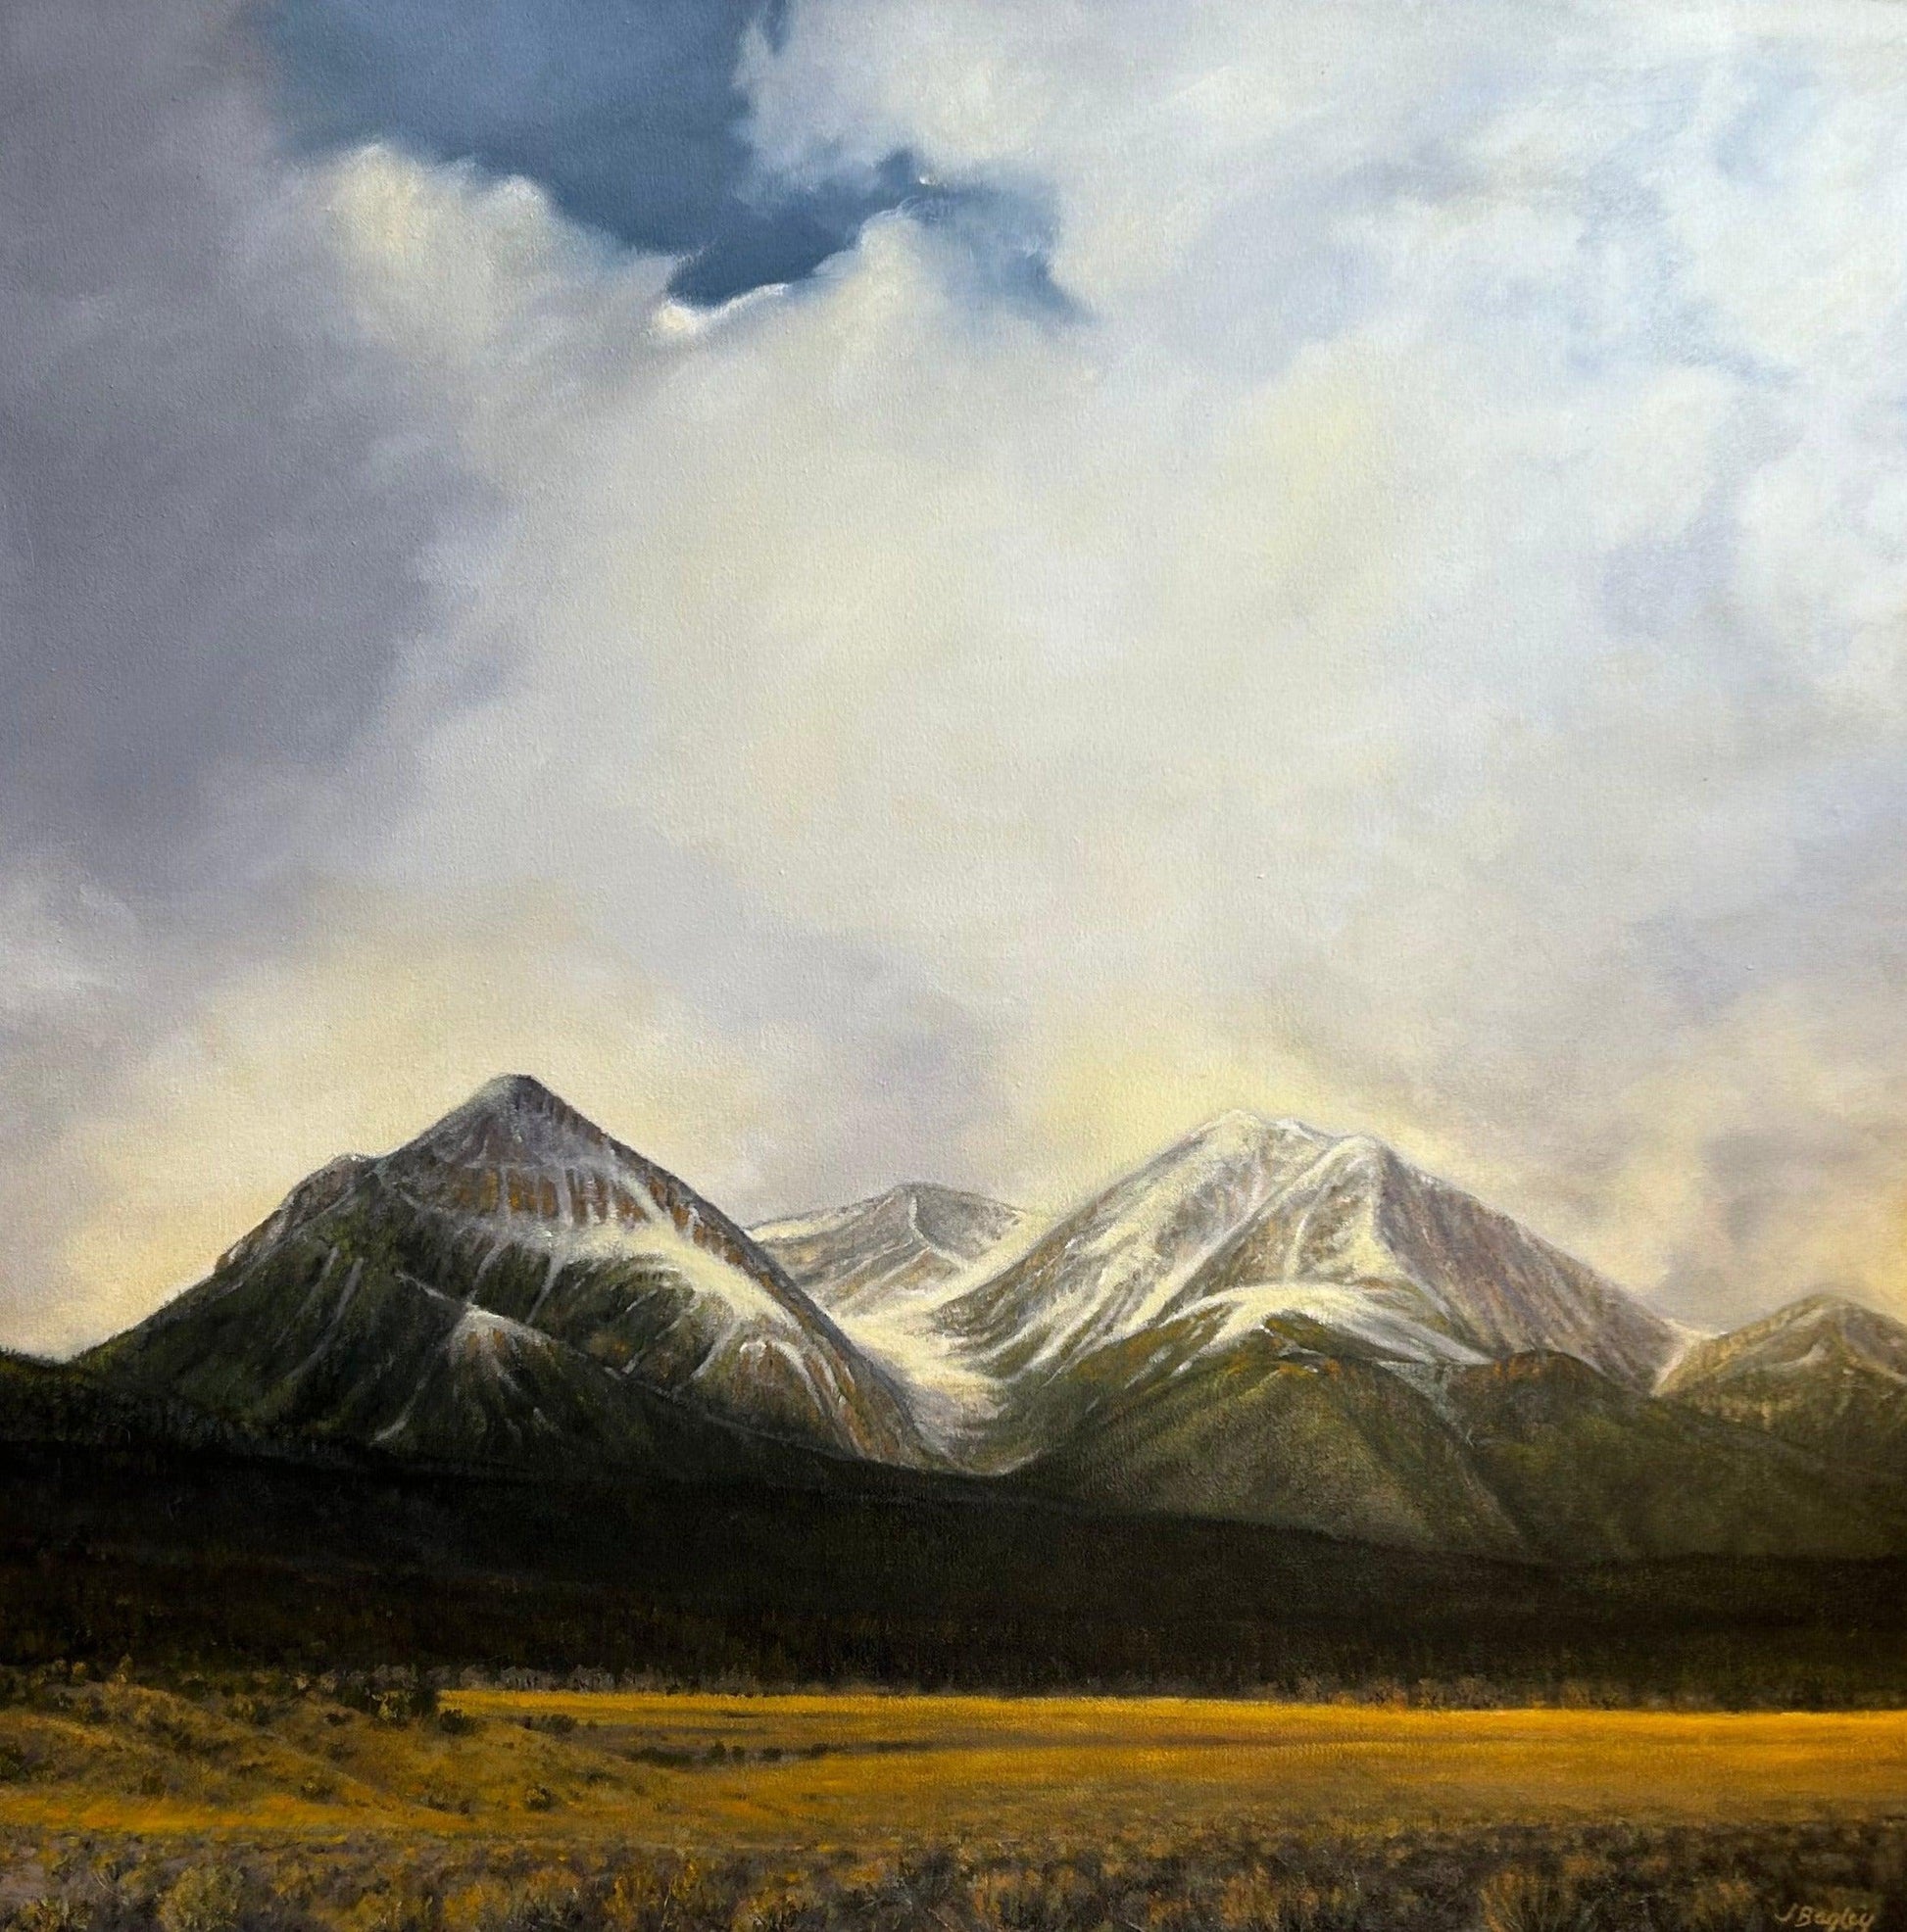 Taos Valley Mountains-Painting-Jim Bagley-Sorrel Sky Gallery